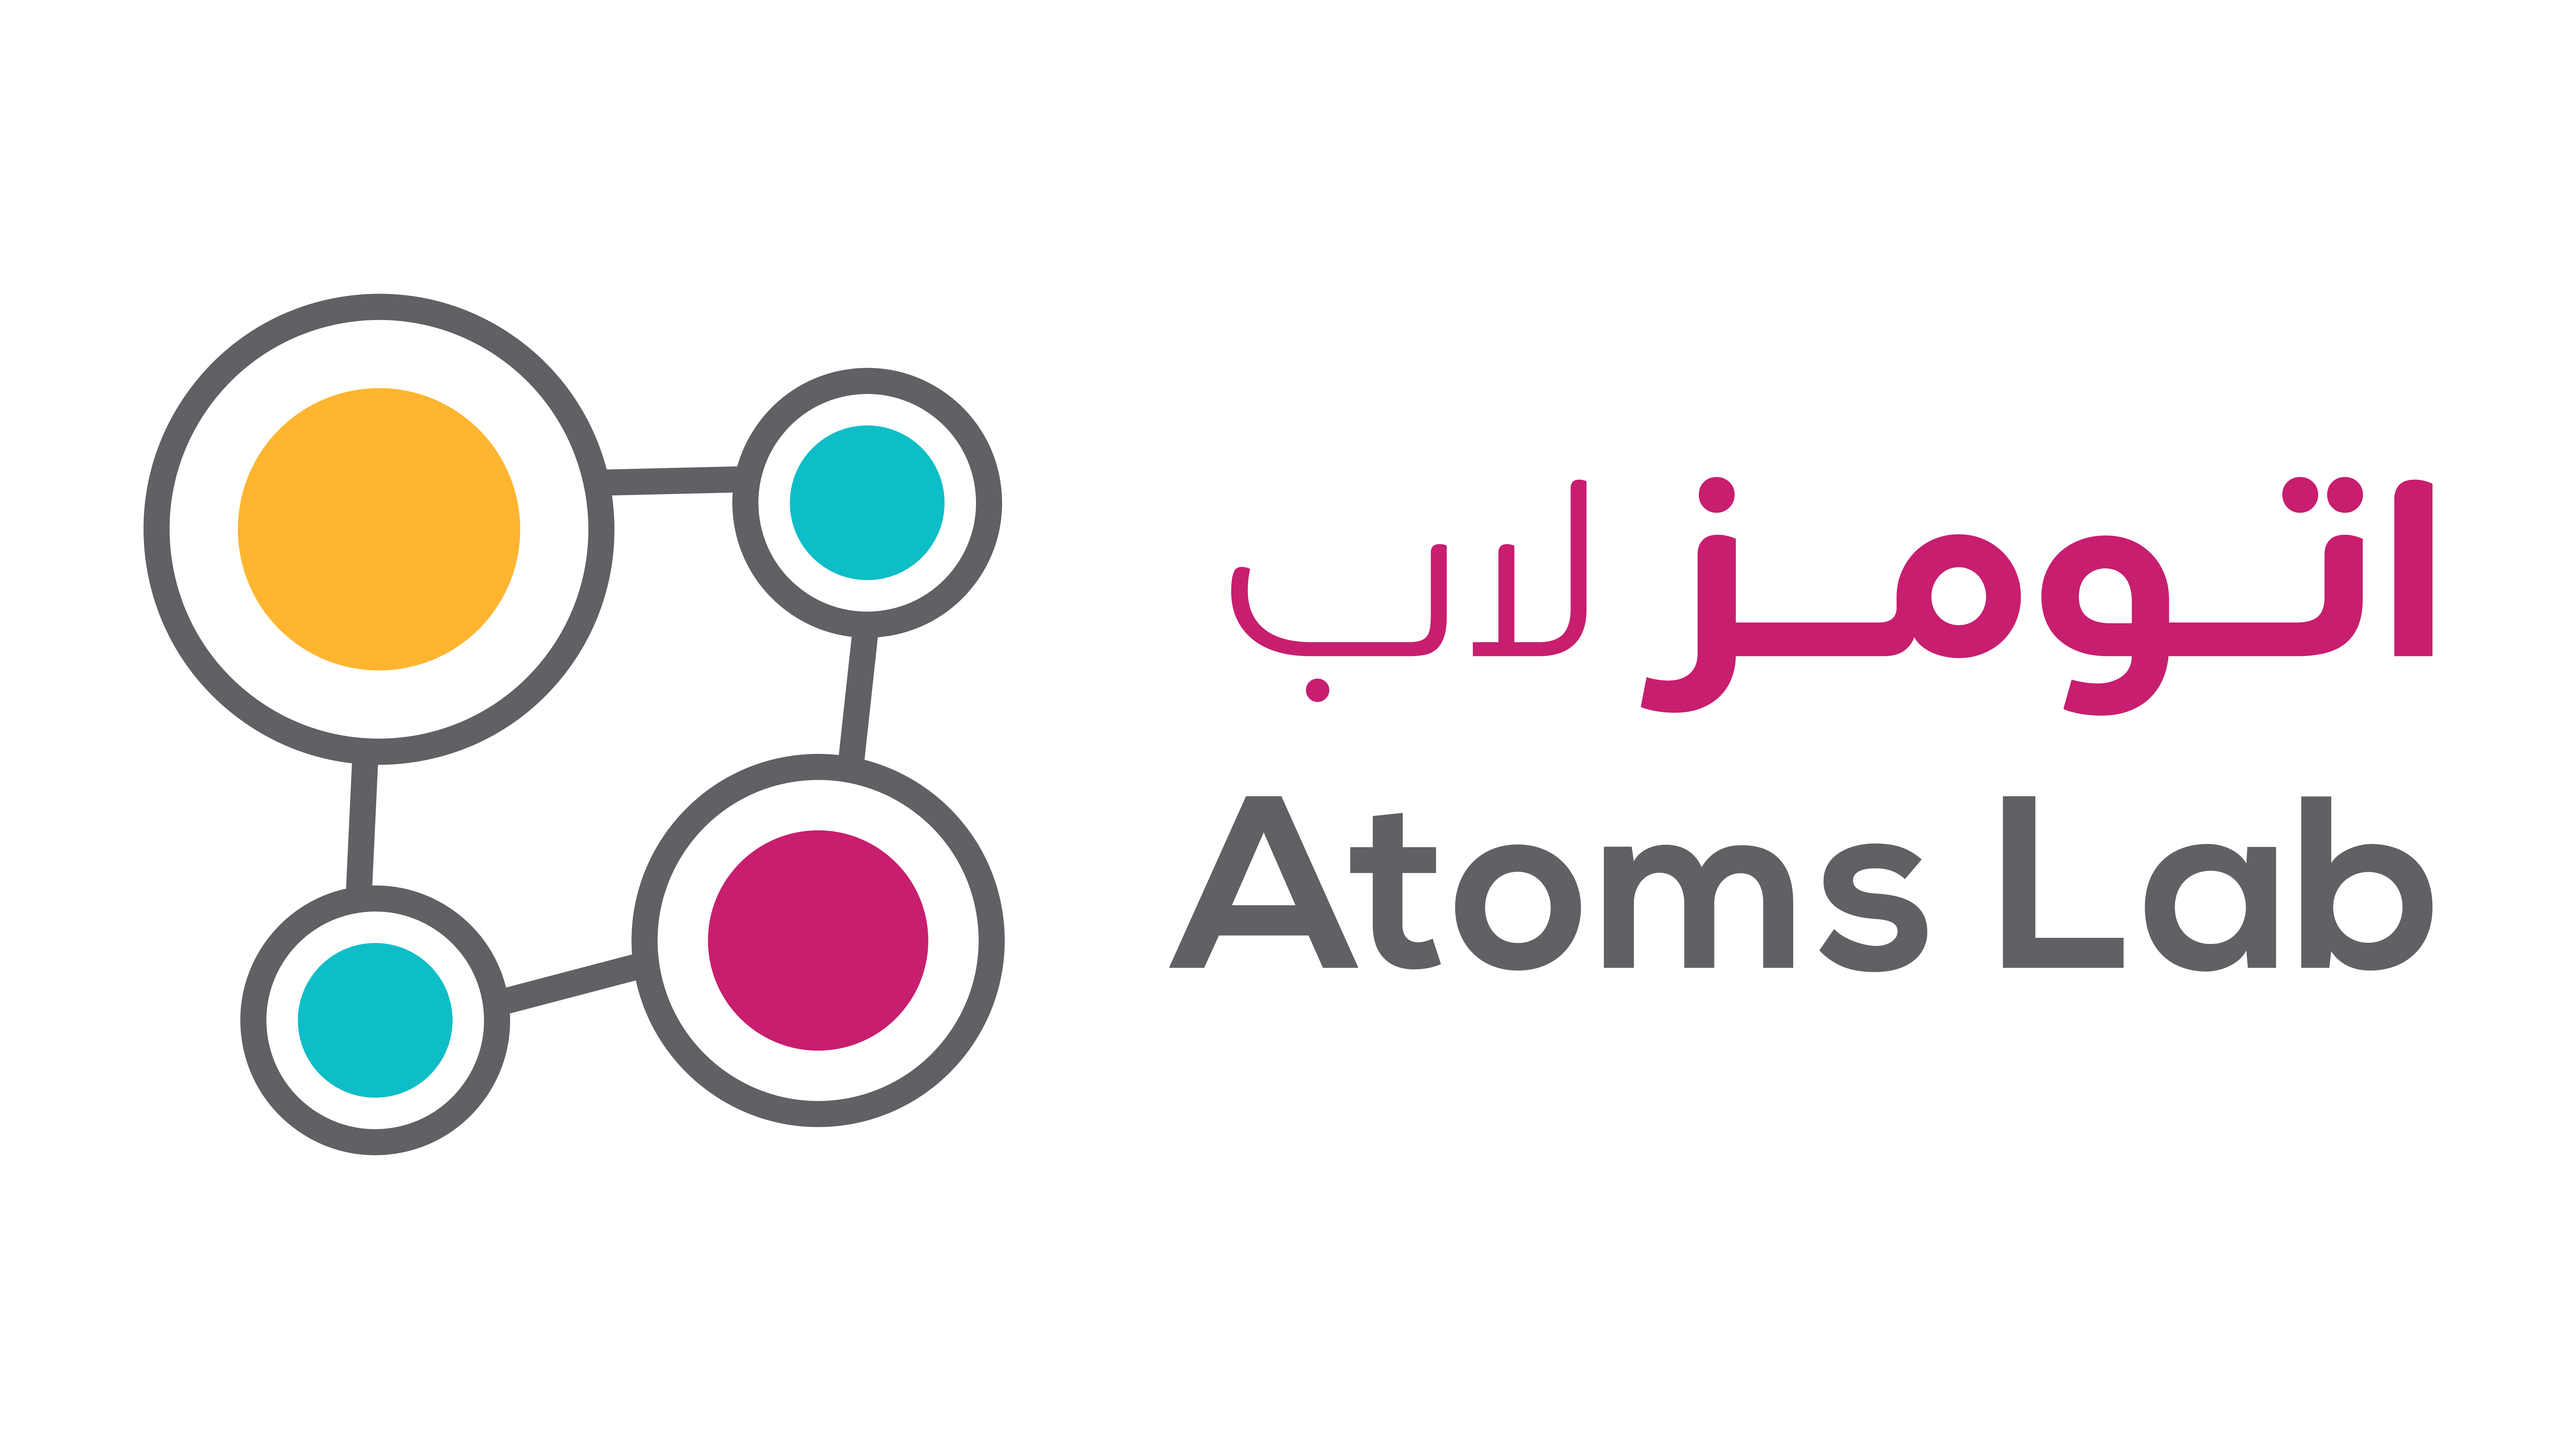 Atoms Lab